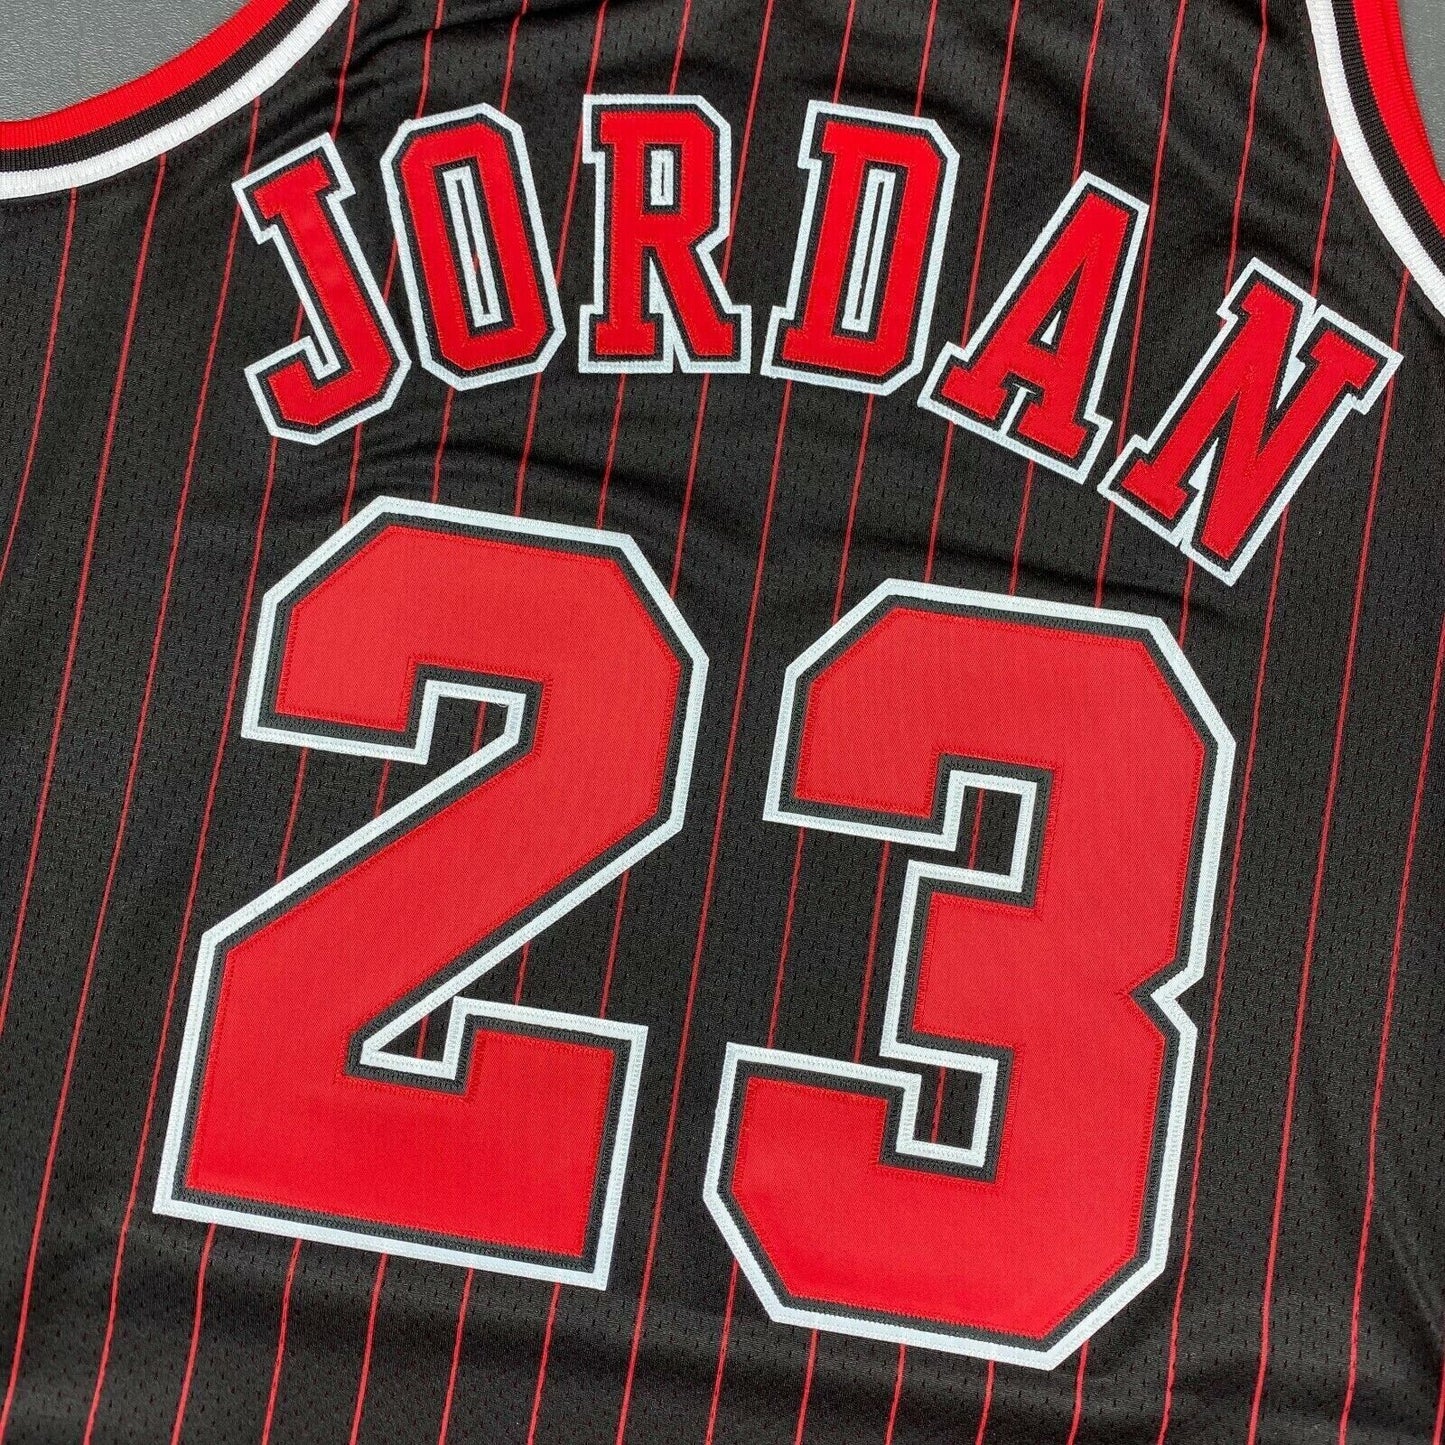 100% Authentic Michael Jordan Mitchell & Ness 96 97 Bulls Jersey Size 40 M Mens